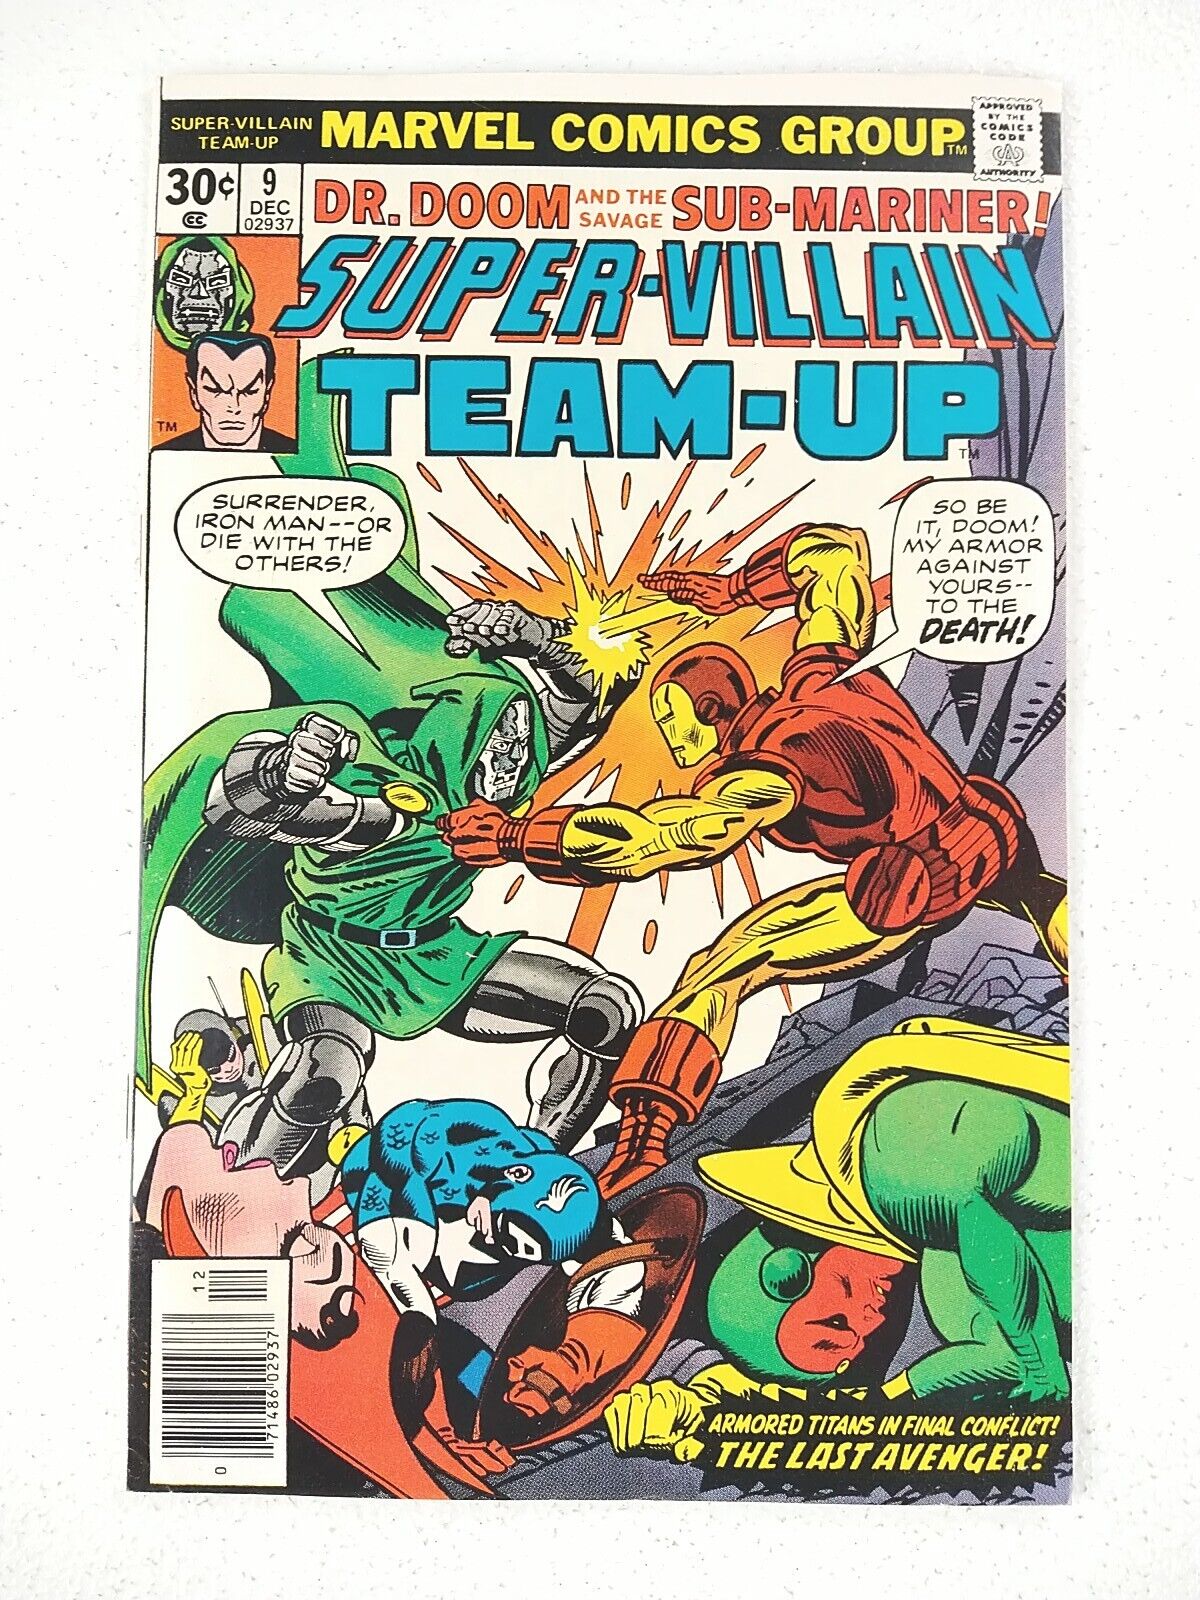 Super-Villain Team-Up #9 Doctor Doom Sub-Mariner vs Avengers 1976 Marvel Comics